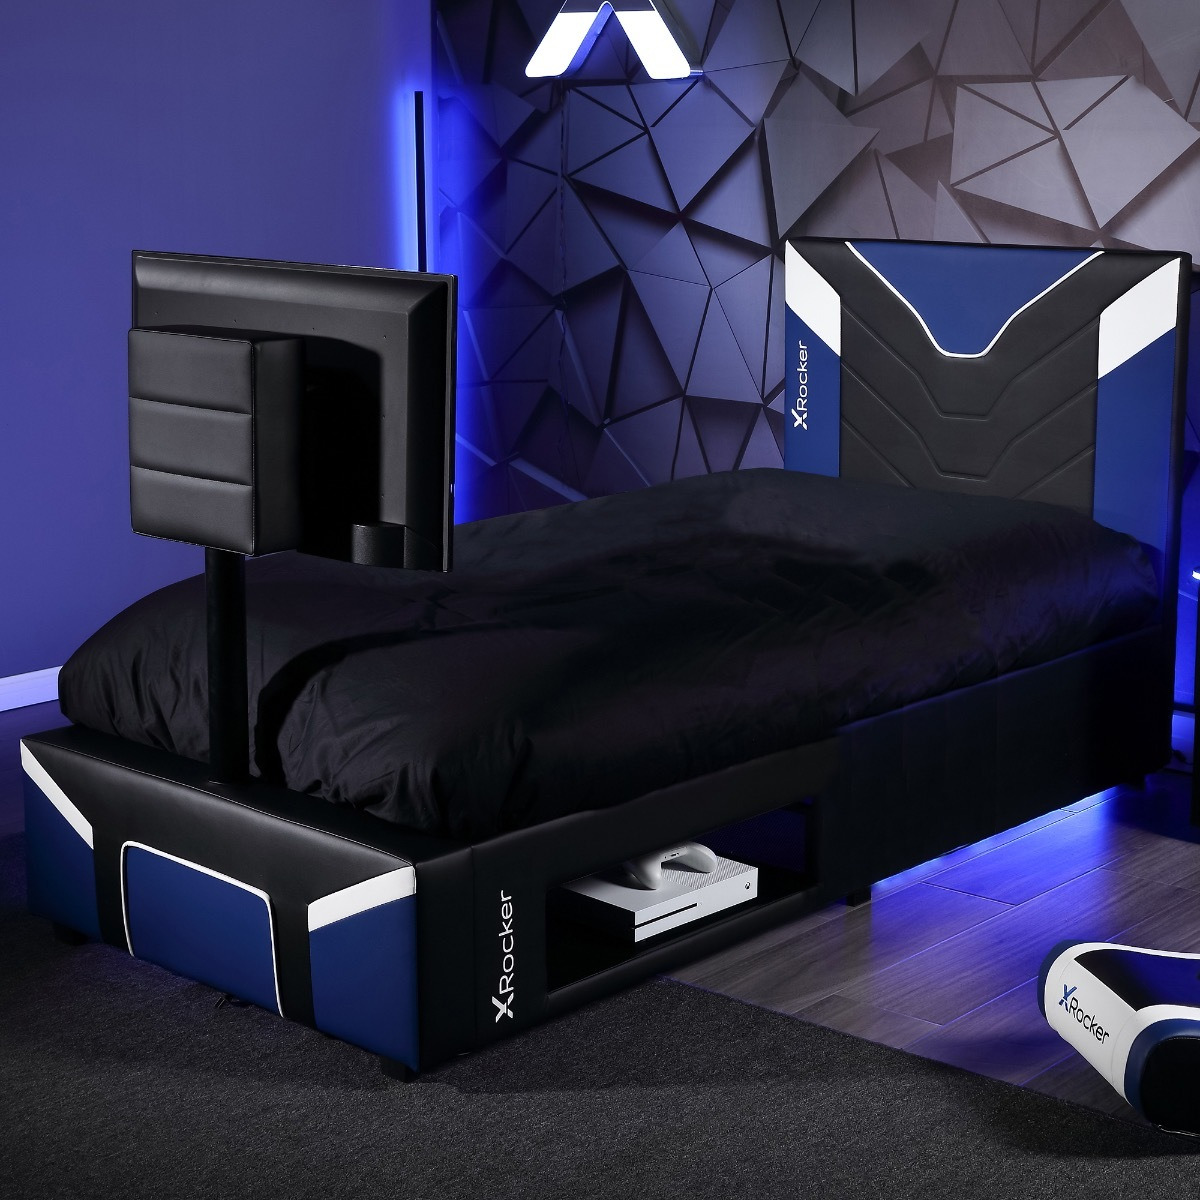 X Rocker Cerberus Twist TV Gaming Bed Single Blue - image 1